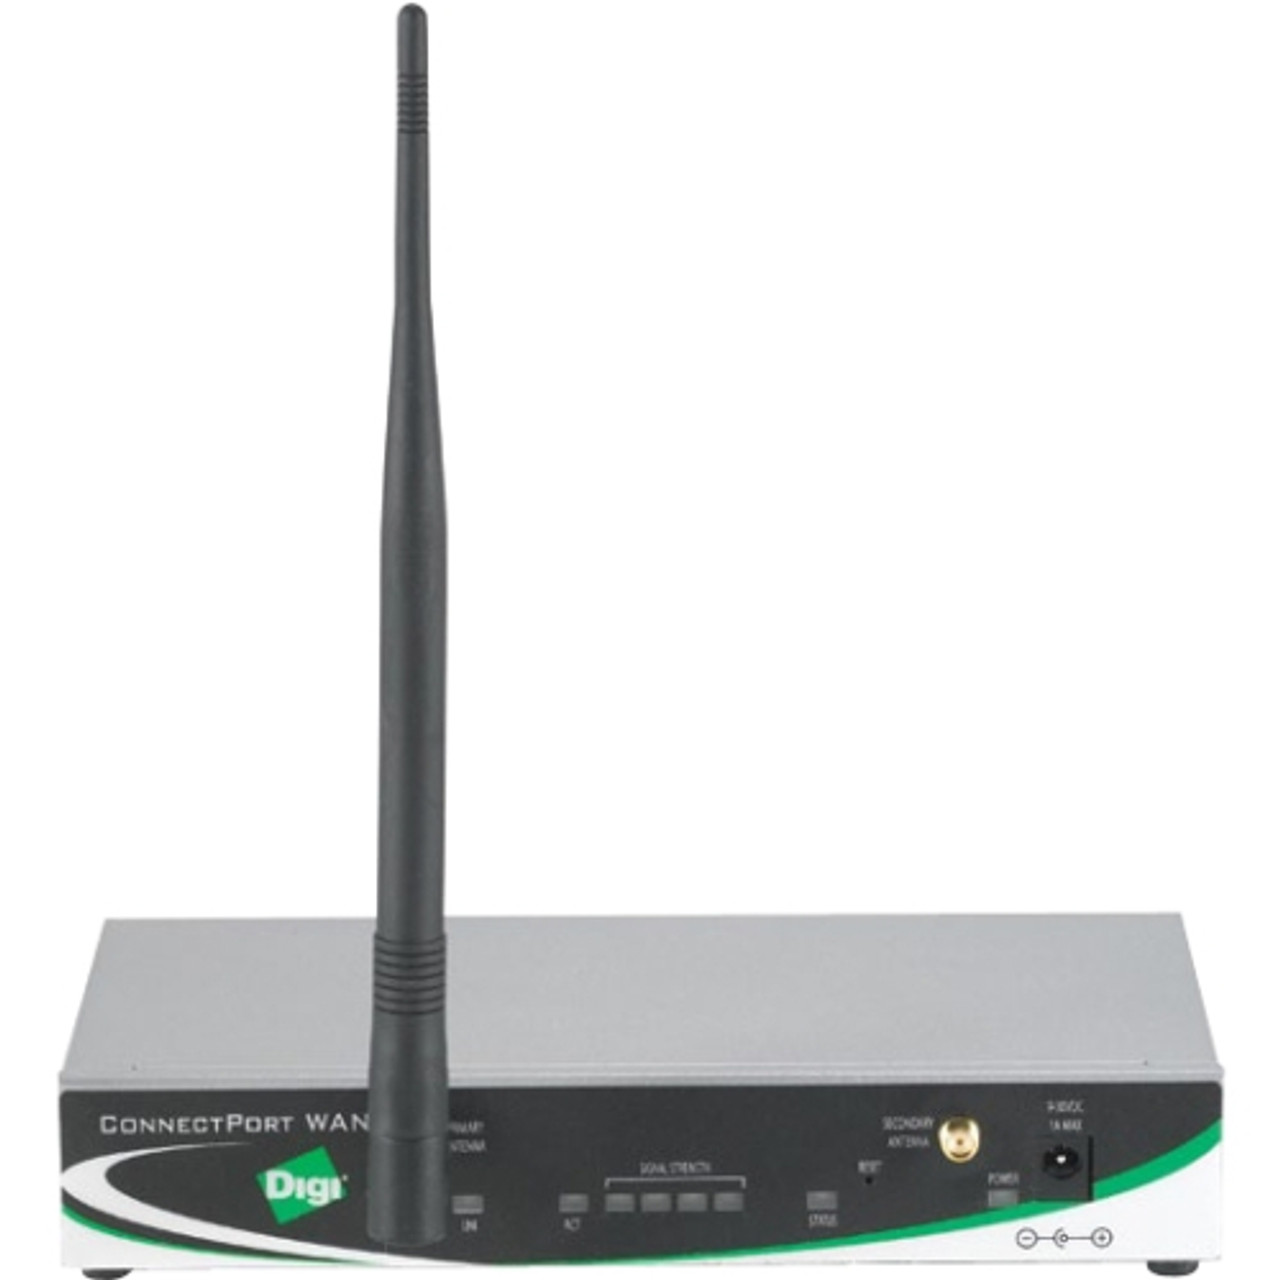 CP-WAN-U301-A Digi ConnectPort IEEE 802.11b/g Wireless Cellular Router (Refurbished)